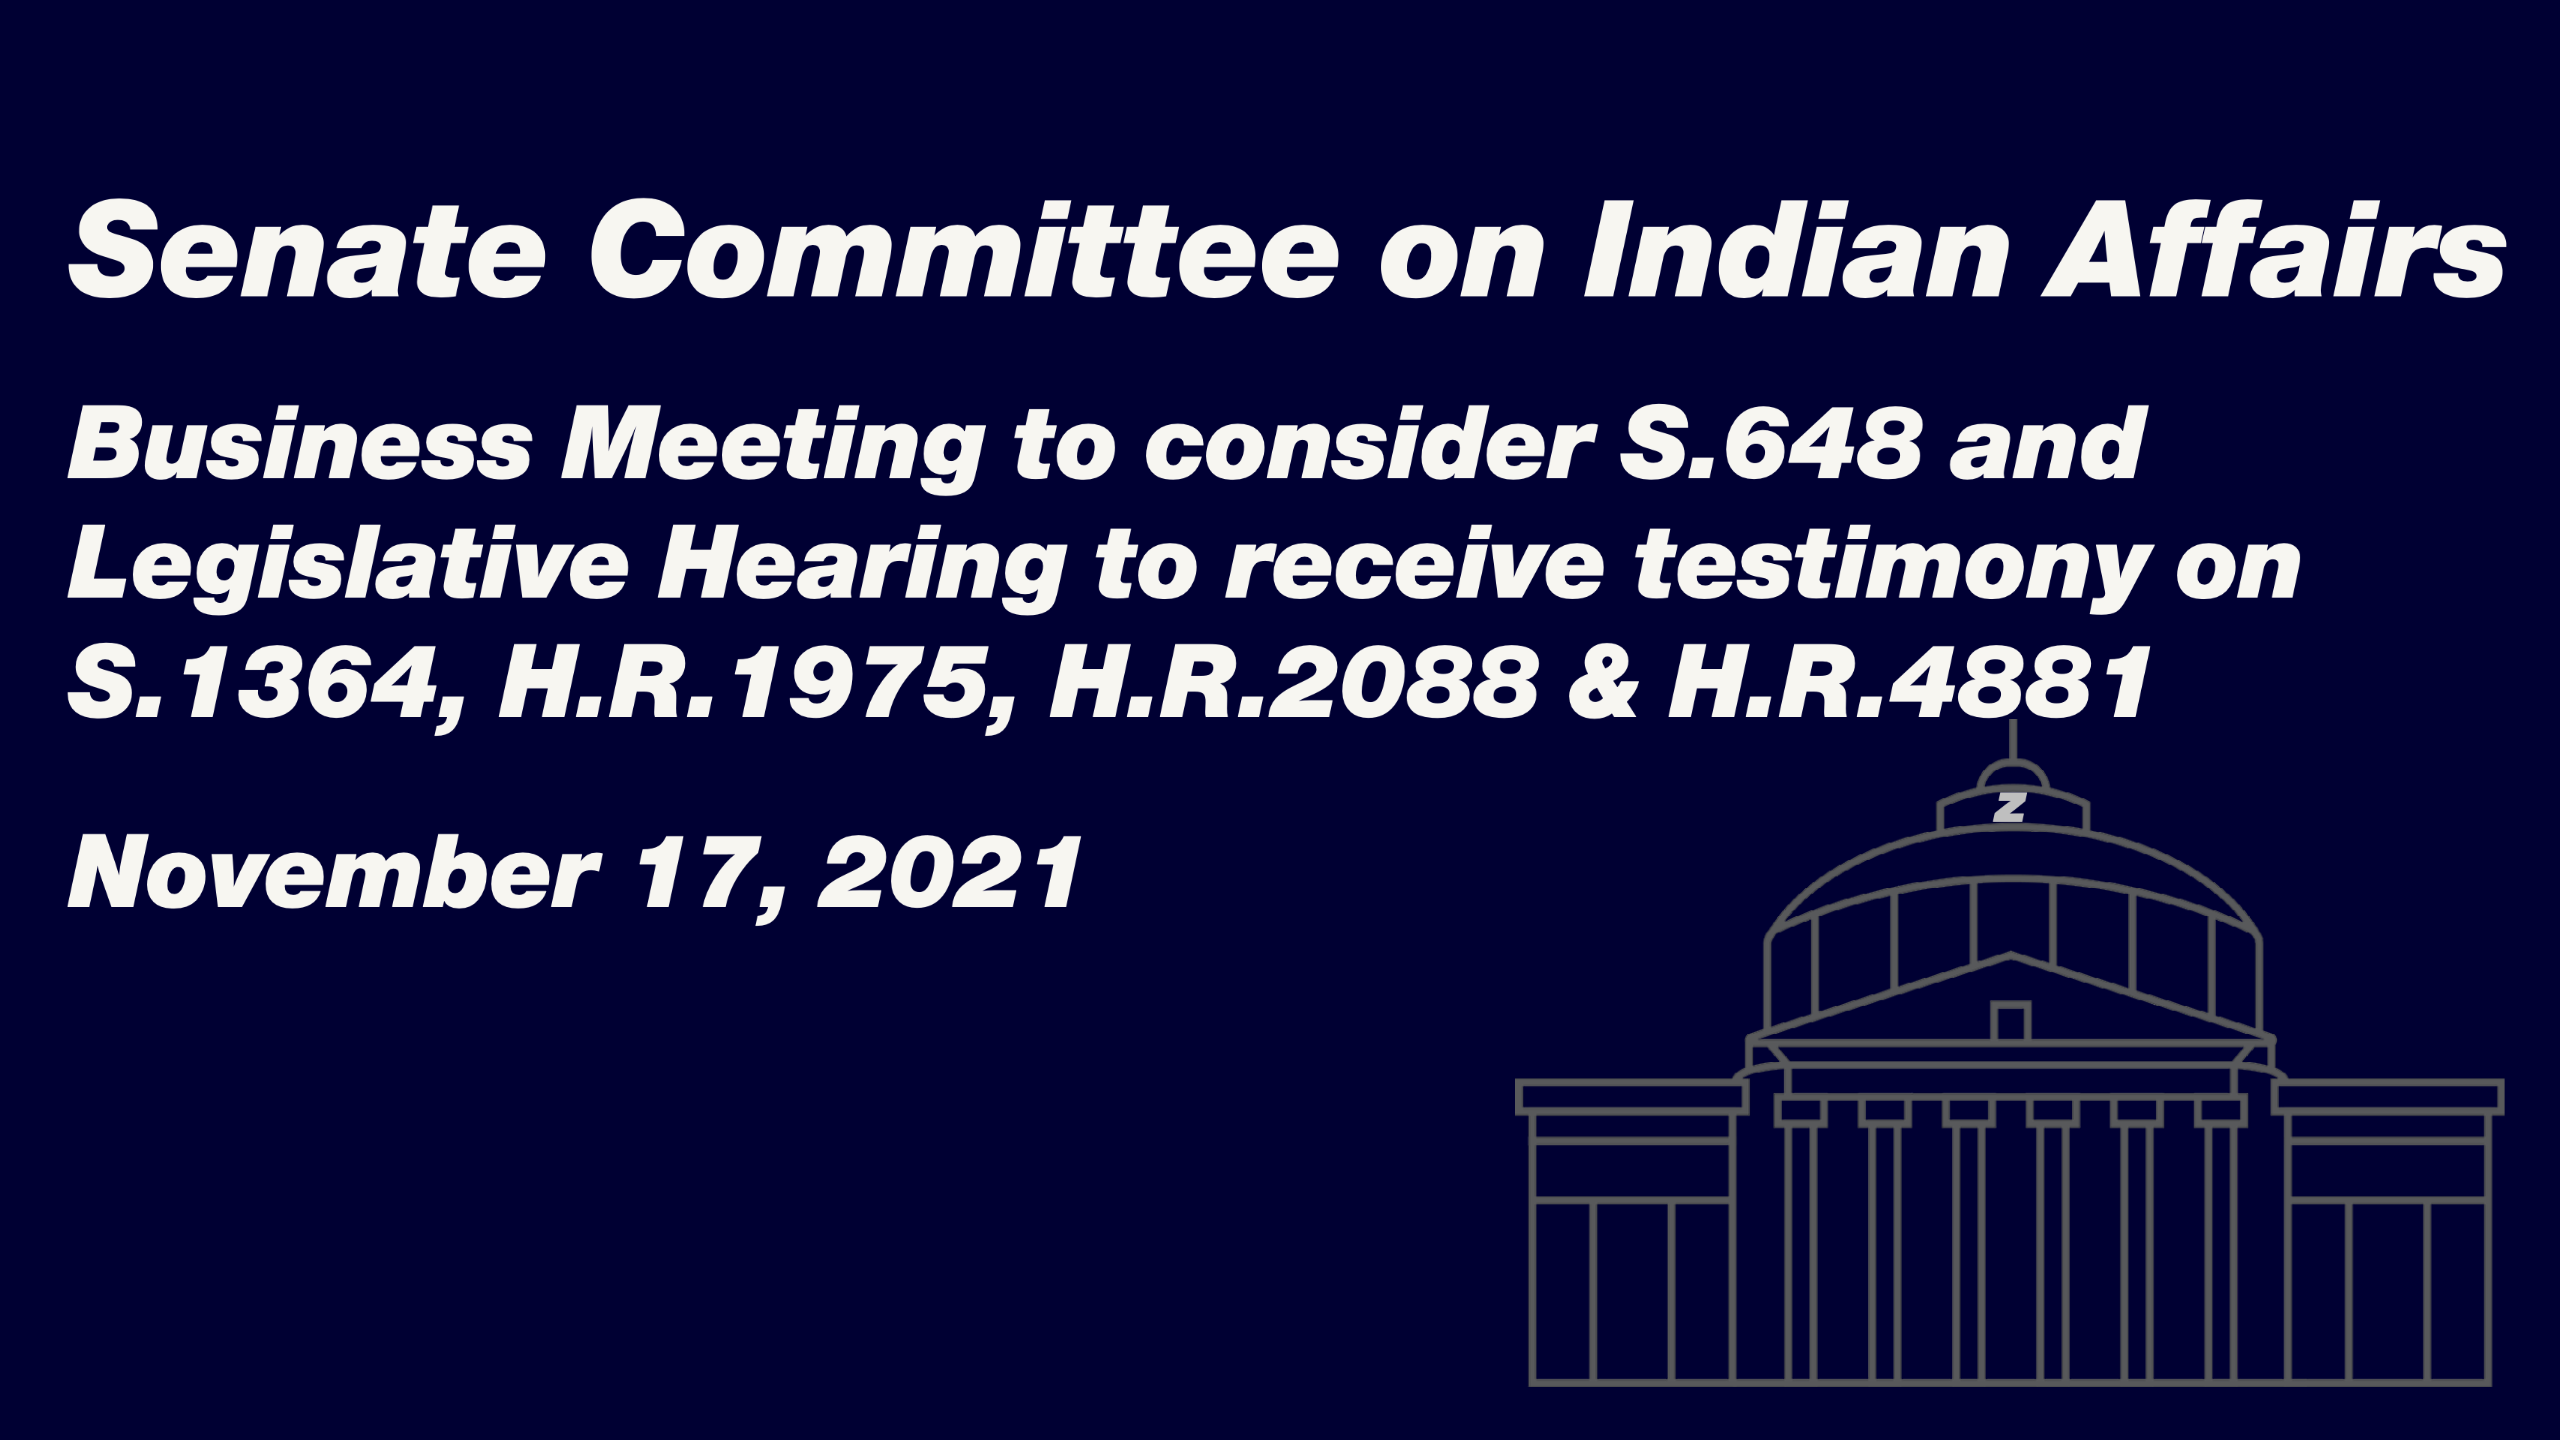 Senate Committee on Indian Affairs Business Meeting and Legislative Hearing